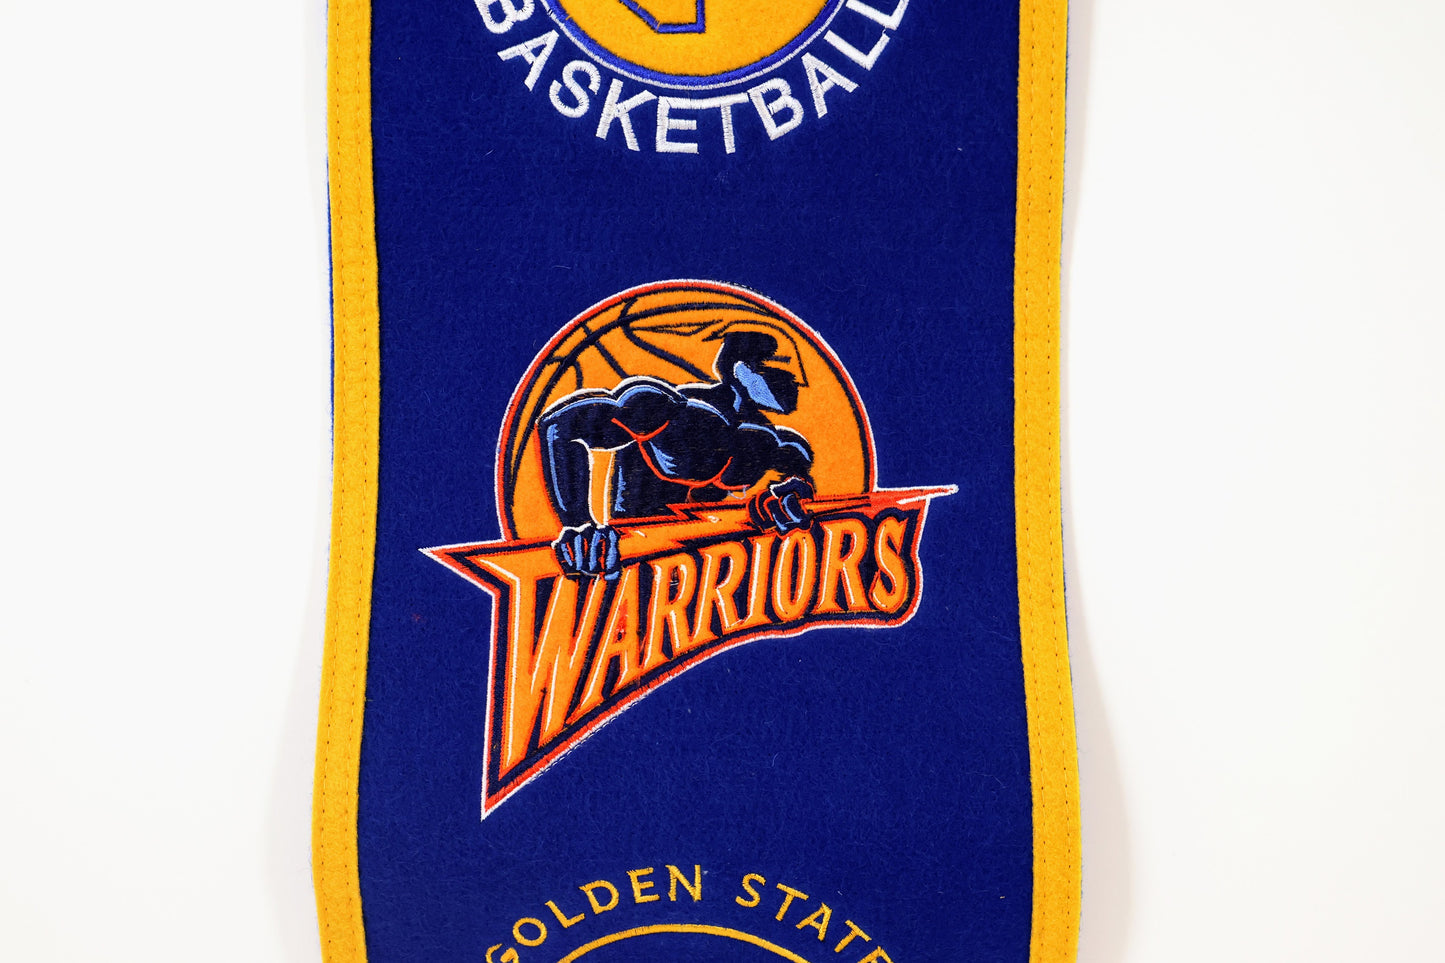 Golden State Warriors Heritage Banner